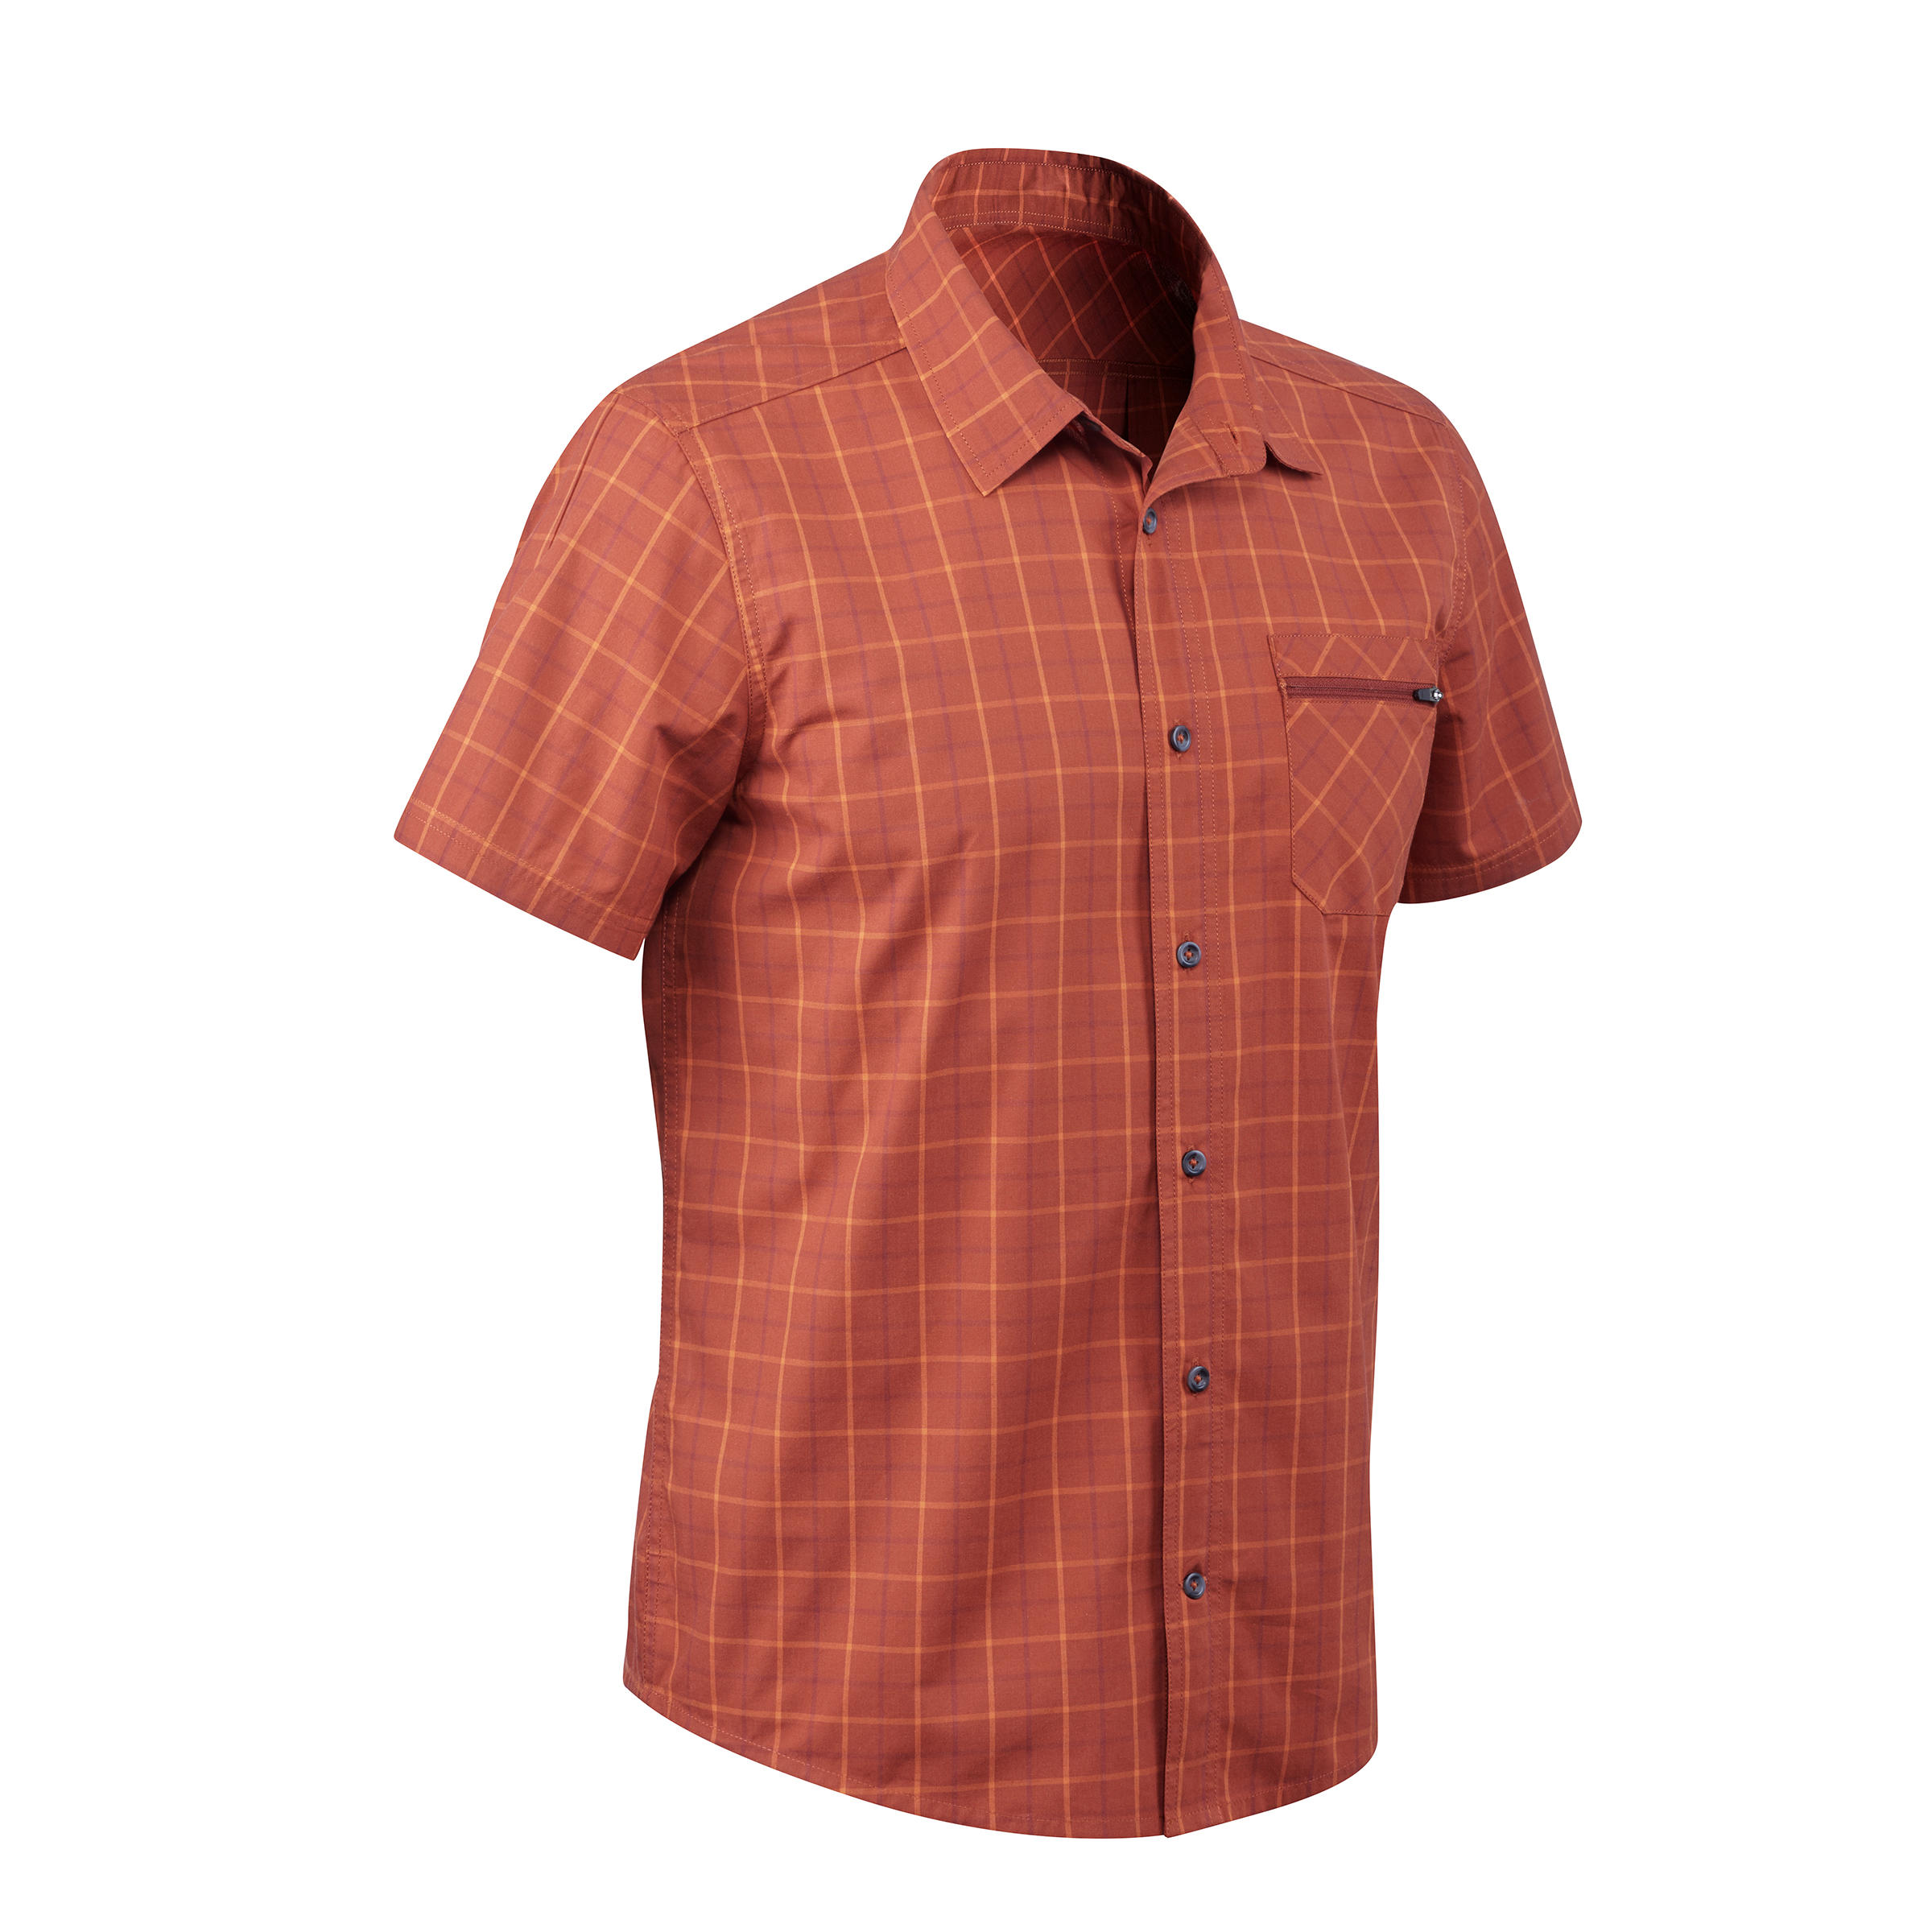 QUECHUA Travel 50 Men's Short-Sleeved Check Shirt - Orange